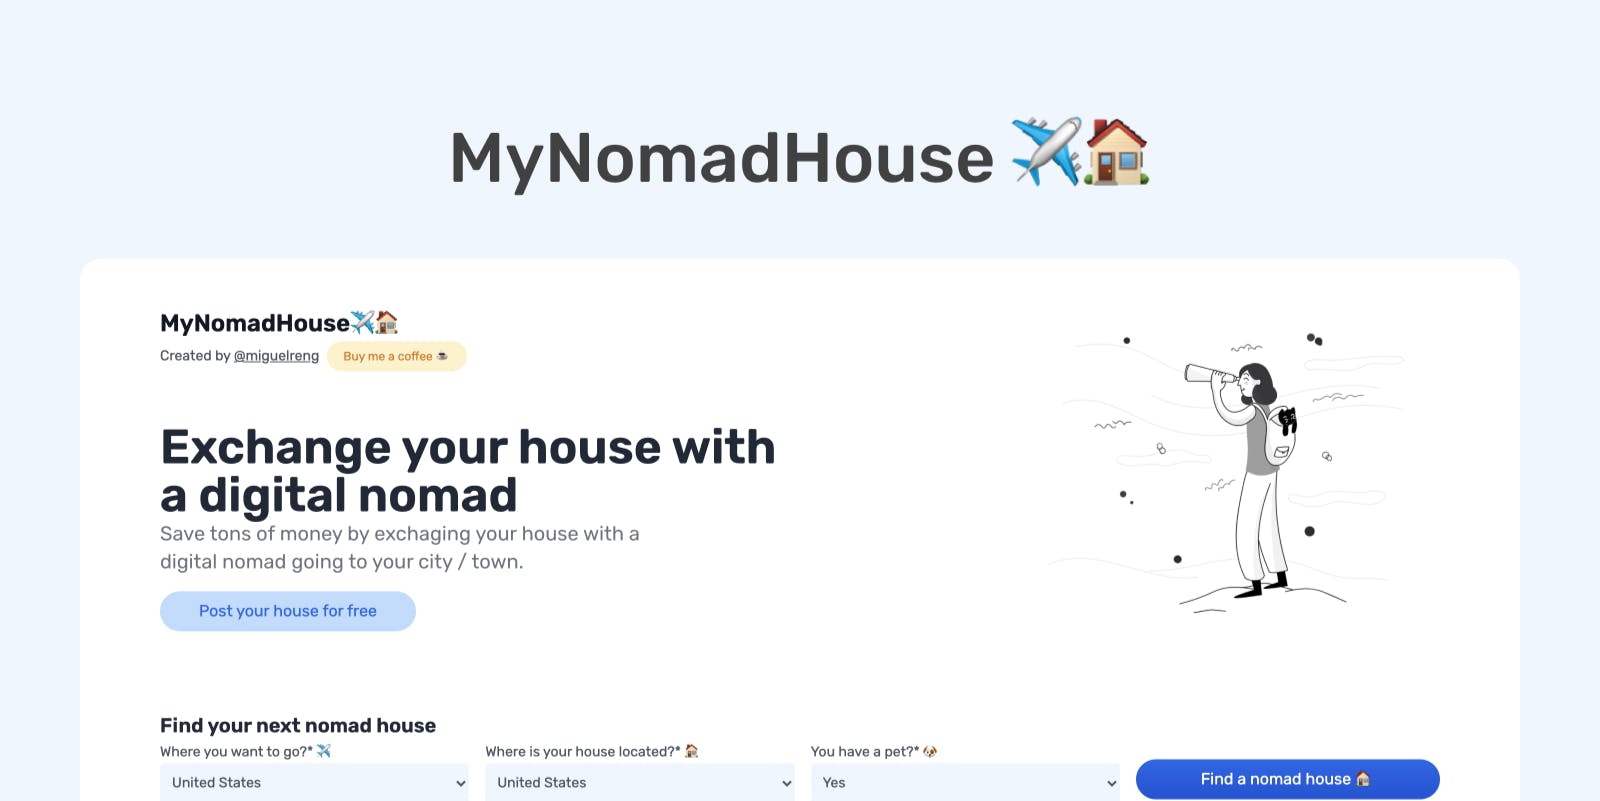 MyNomadHouse media 1